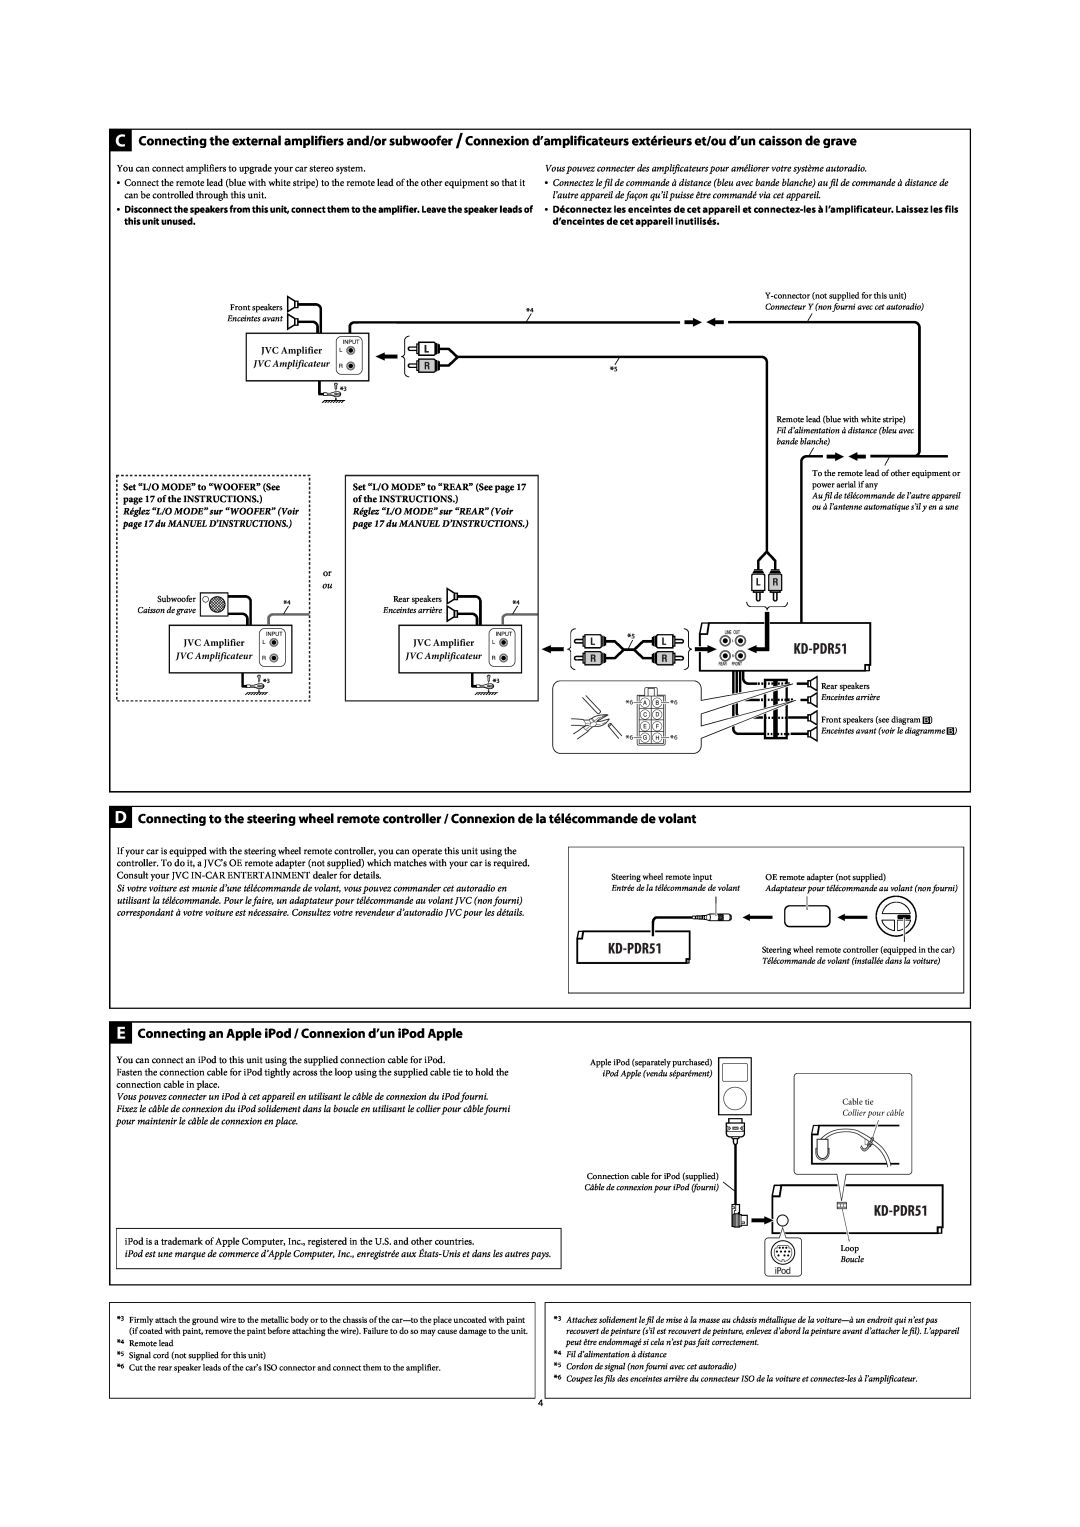 JVC GET0425-001A manual E Connecting an Apple iPod / Connexion d’un iPod Apple 